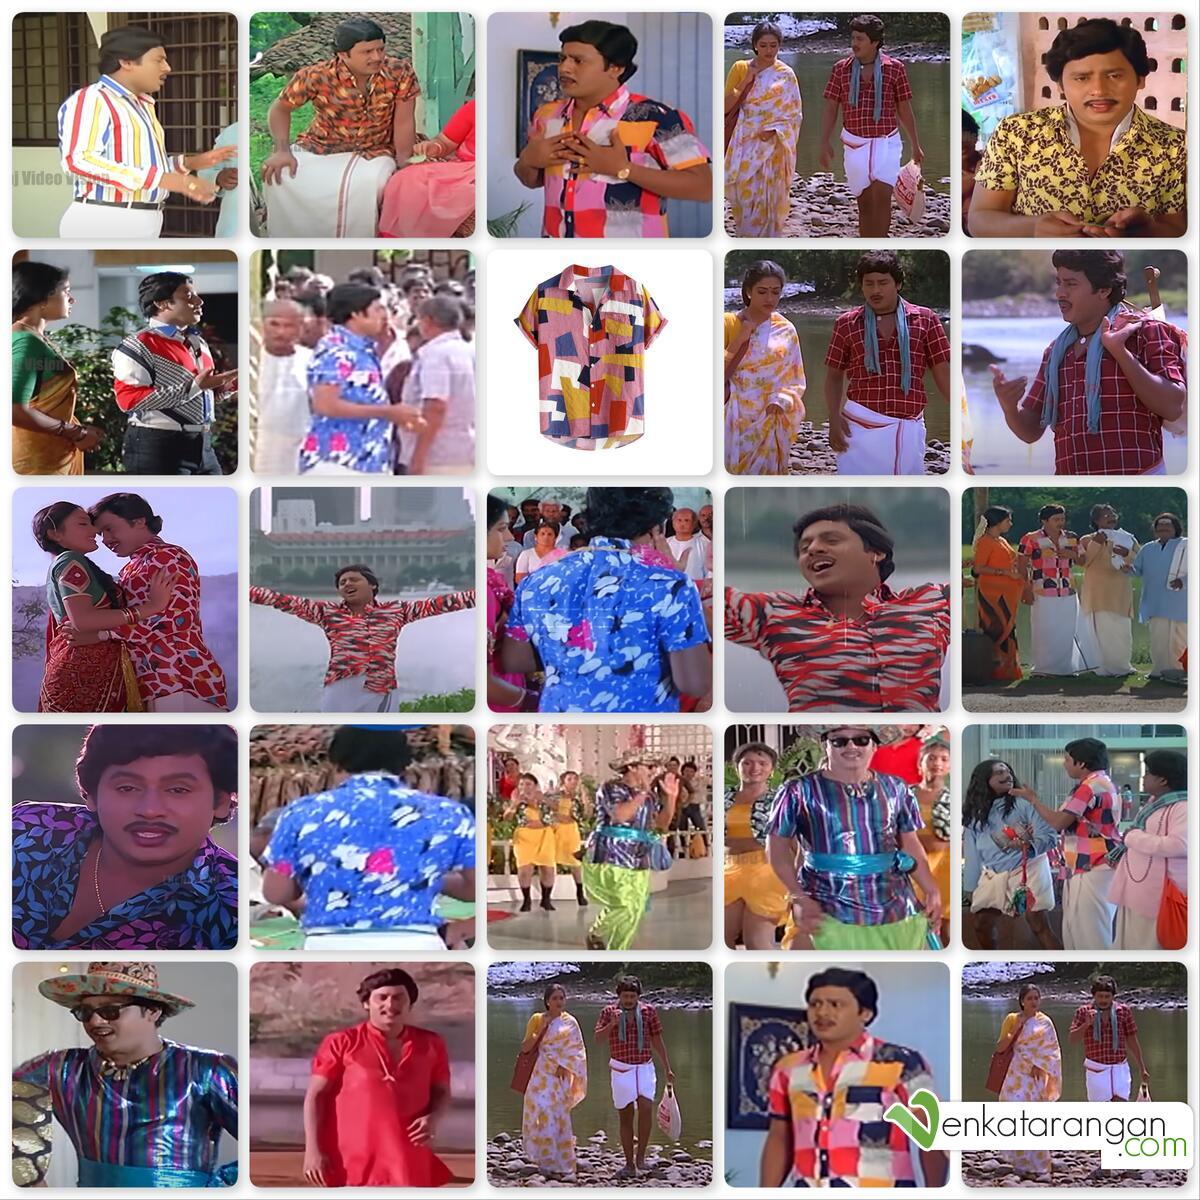 Various costumes worn by Ramarajan